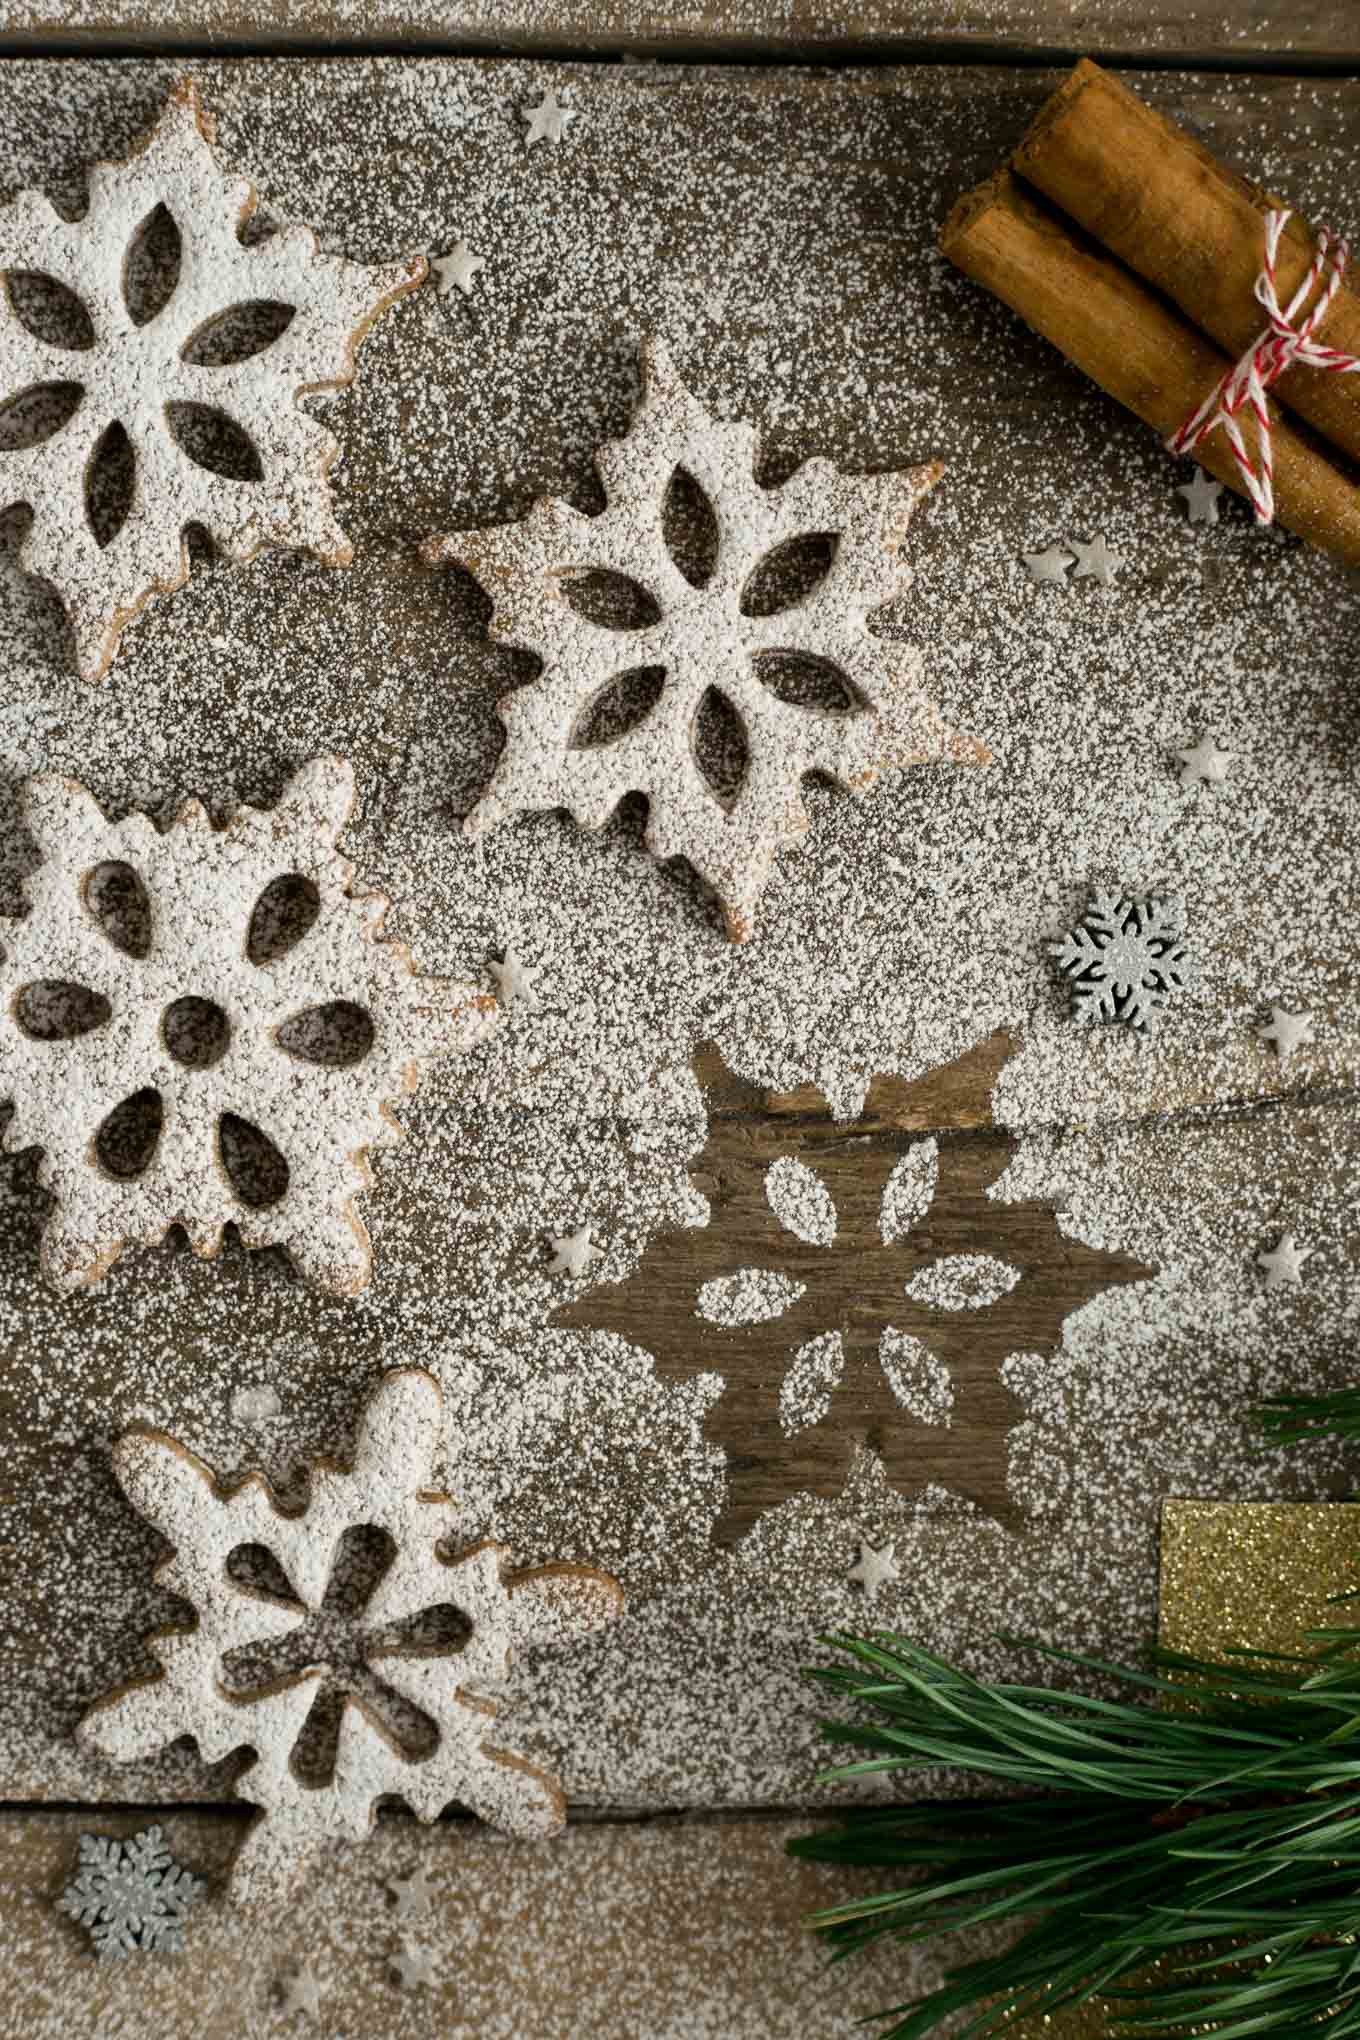 Winter snowflake cookies with cinnamon & maple. Delicious and fun to make cookies, perfect for Christmas! #cookies #Christmas #vegan | via @annabanana.co